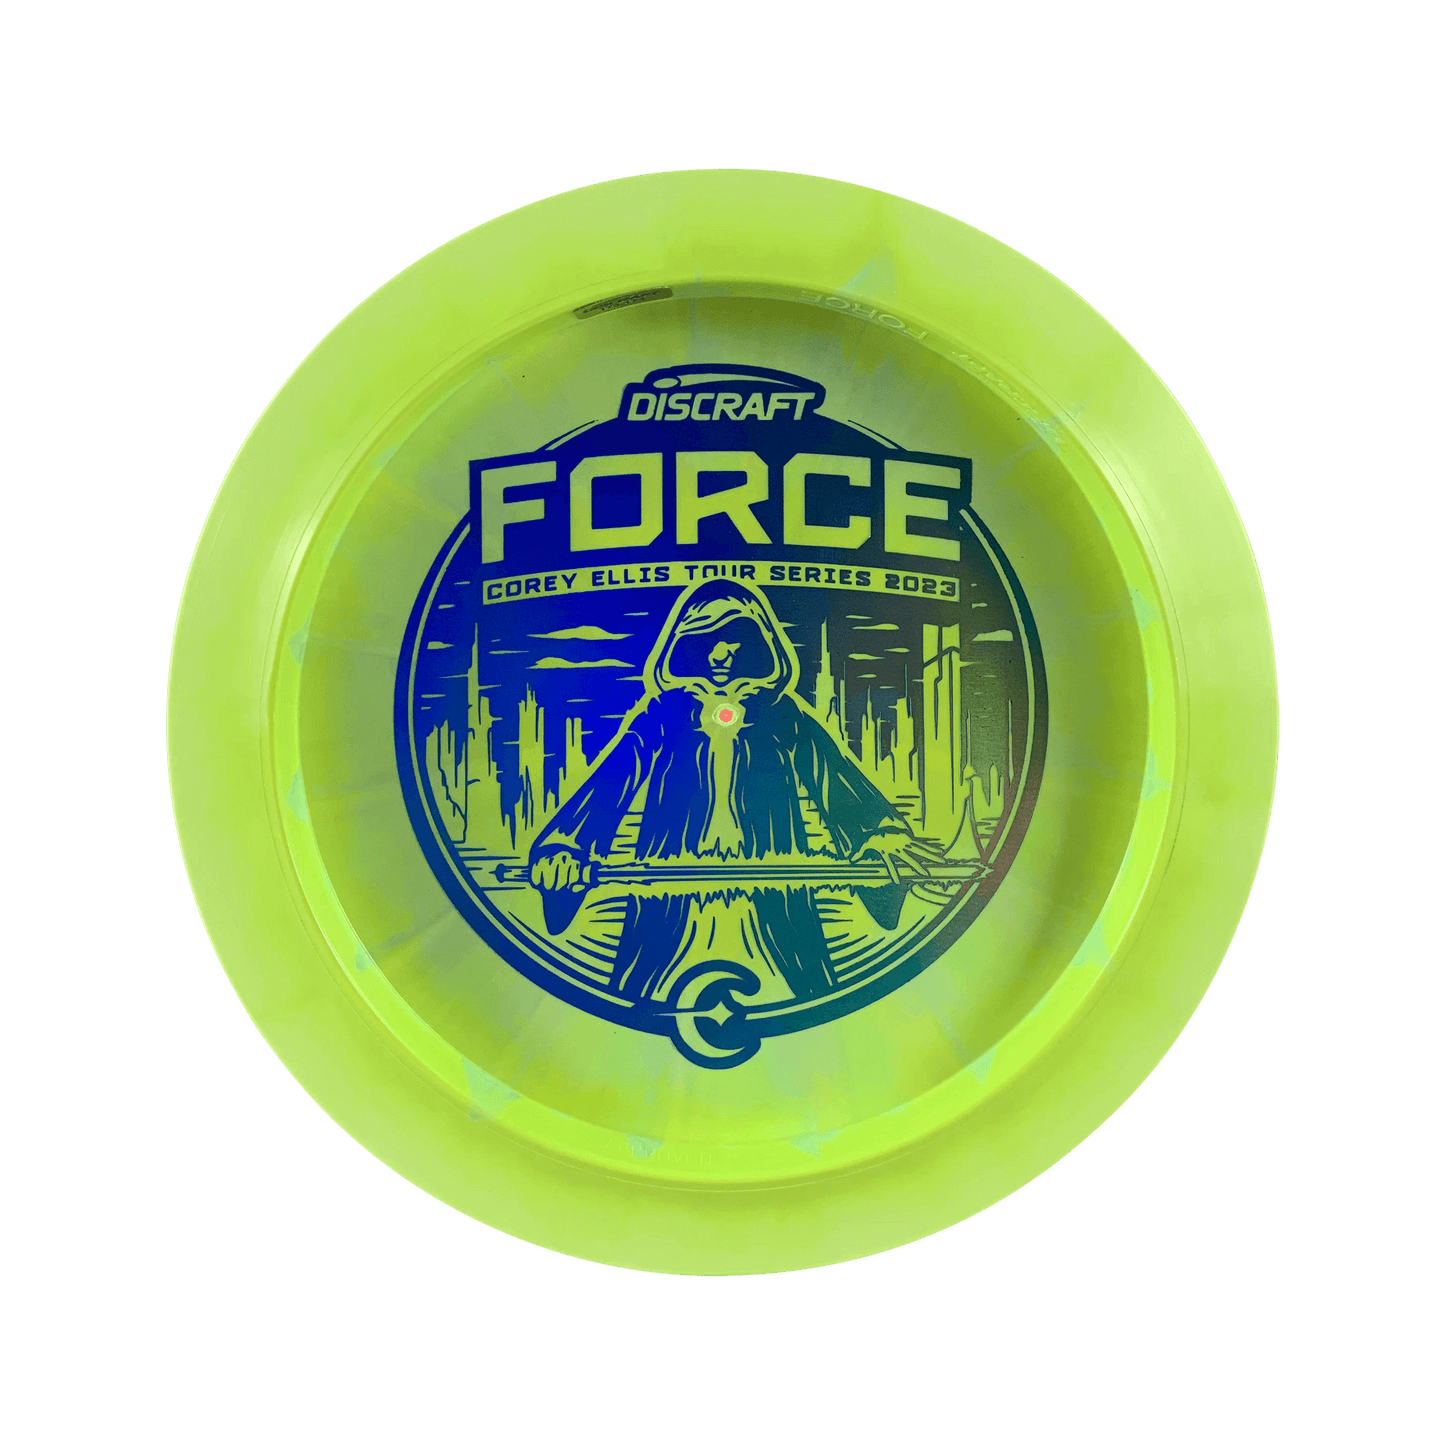 ESP Swirl Force - Corey Ellis Tour Series 2023 Disc Discraft multi / yellow green 173 